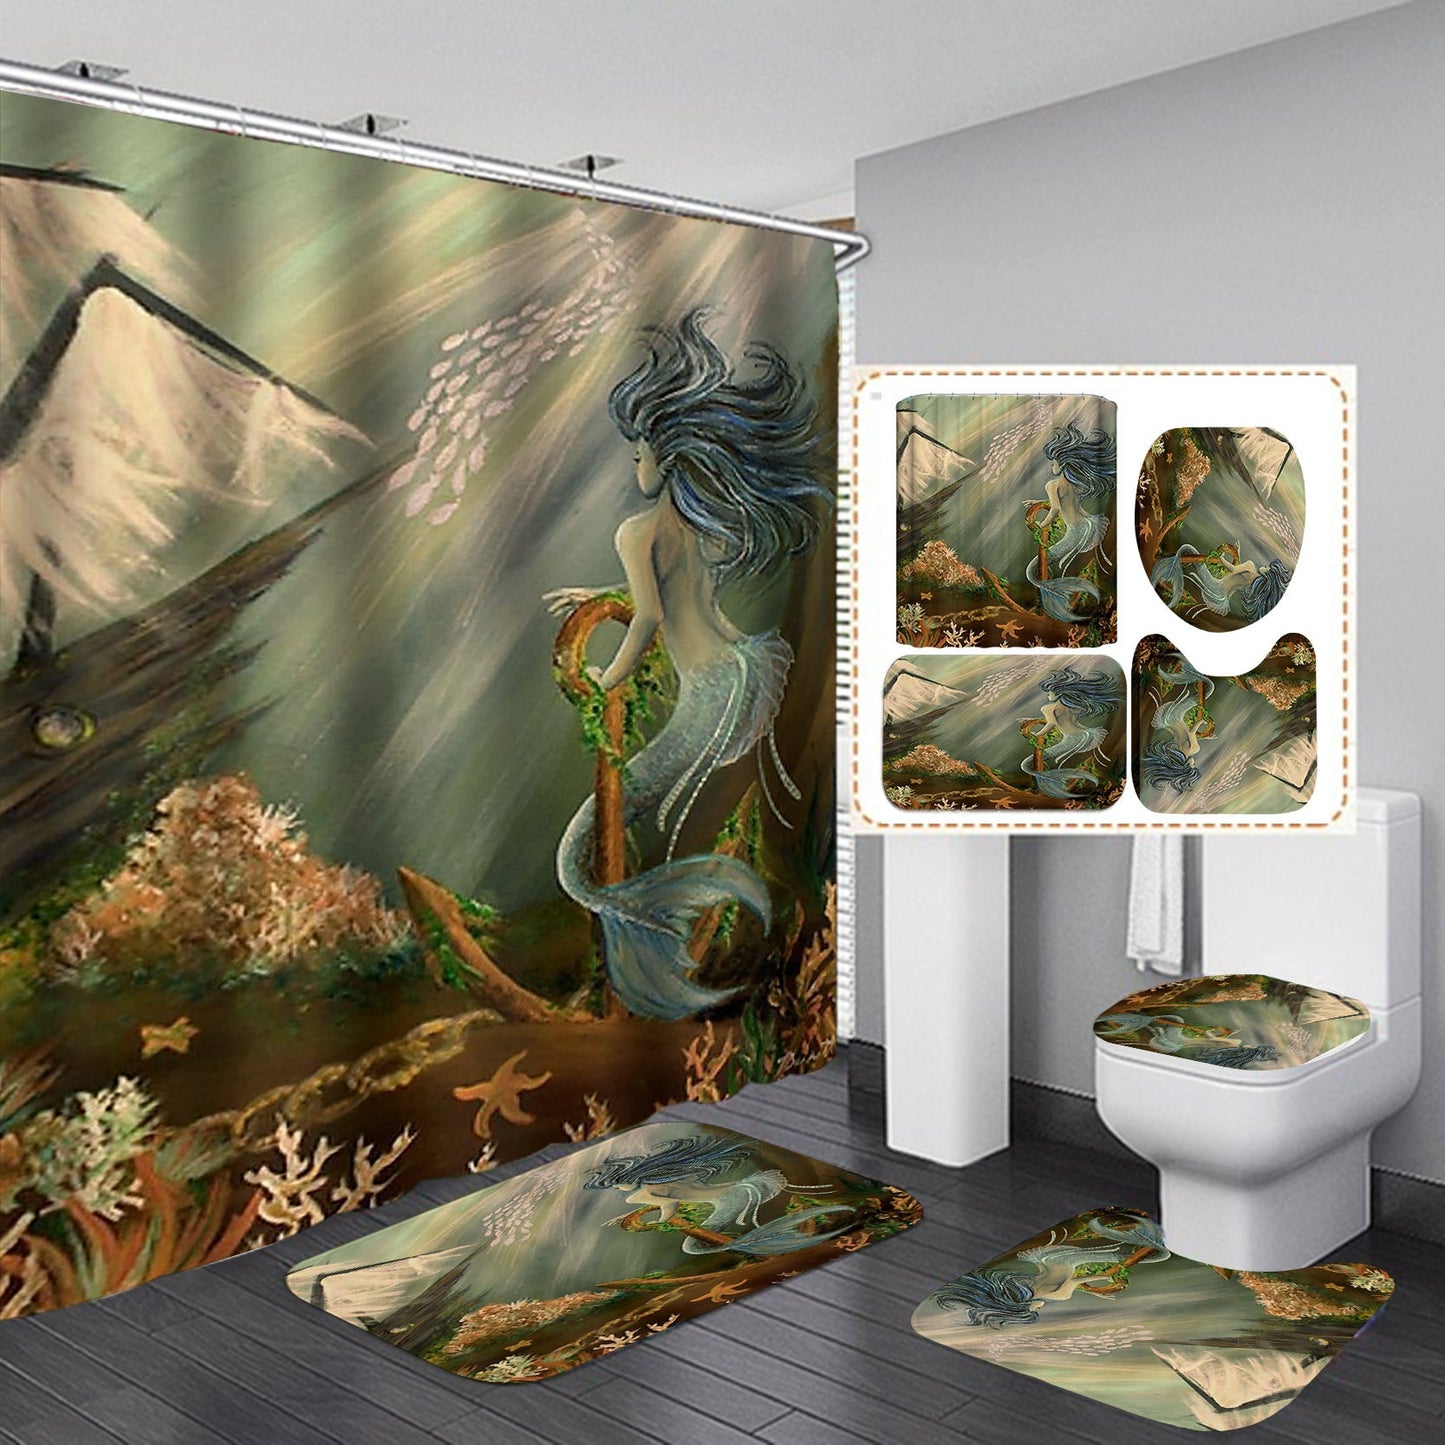 Cartoon Mermaid Design Shower Curtain Bathroom SetsNon-Slip Toilet Lid Cover